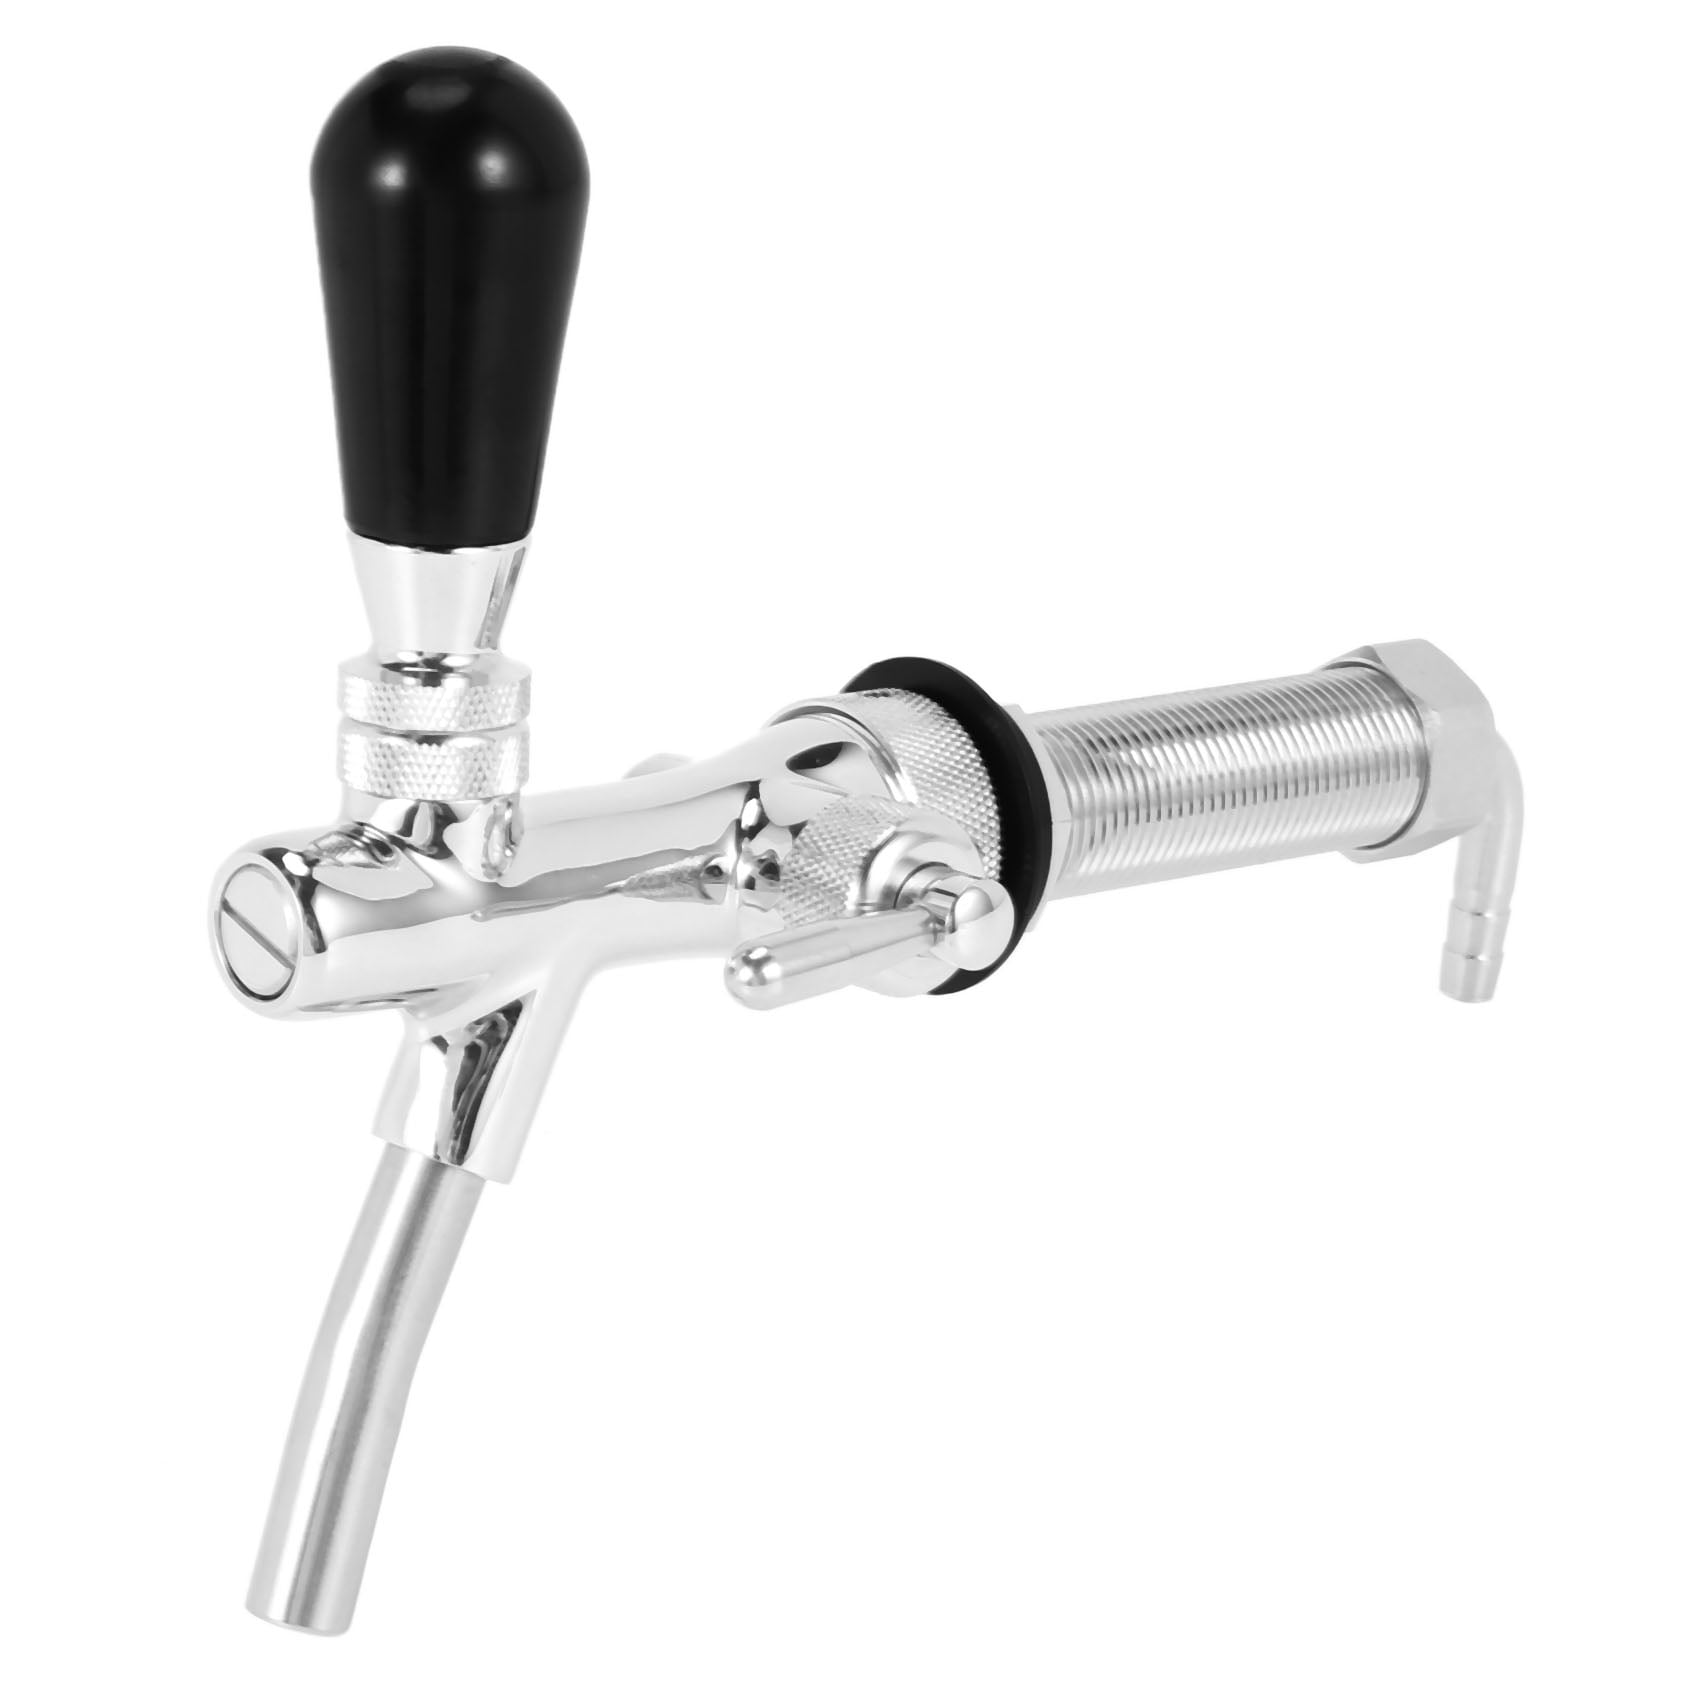 Draft Beer Faucet Tap G5/8 Shank Long Stem Brew Adjustable Flow Control Tool 